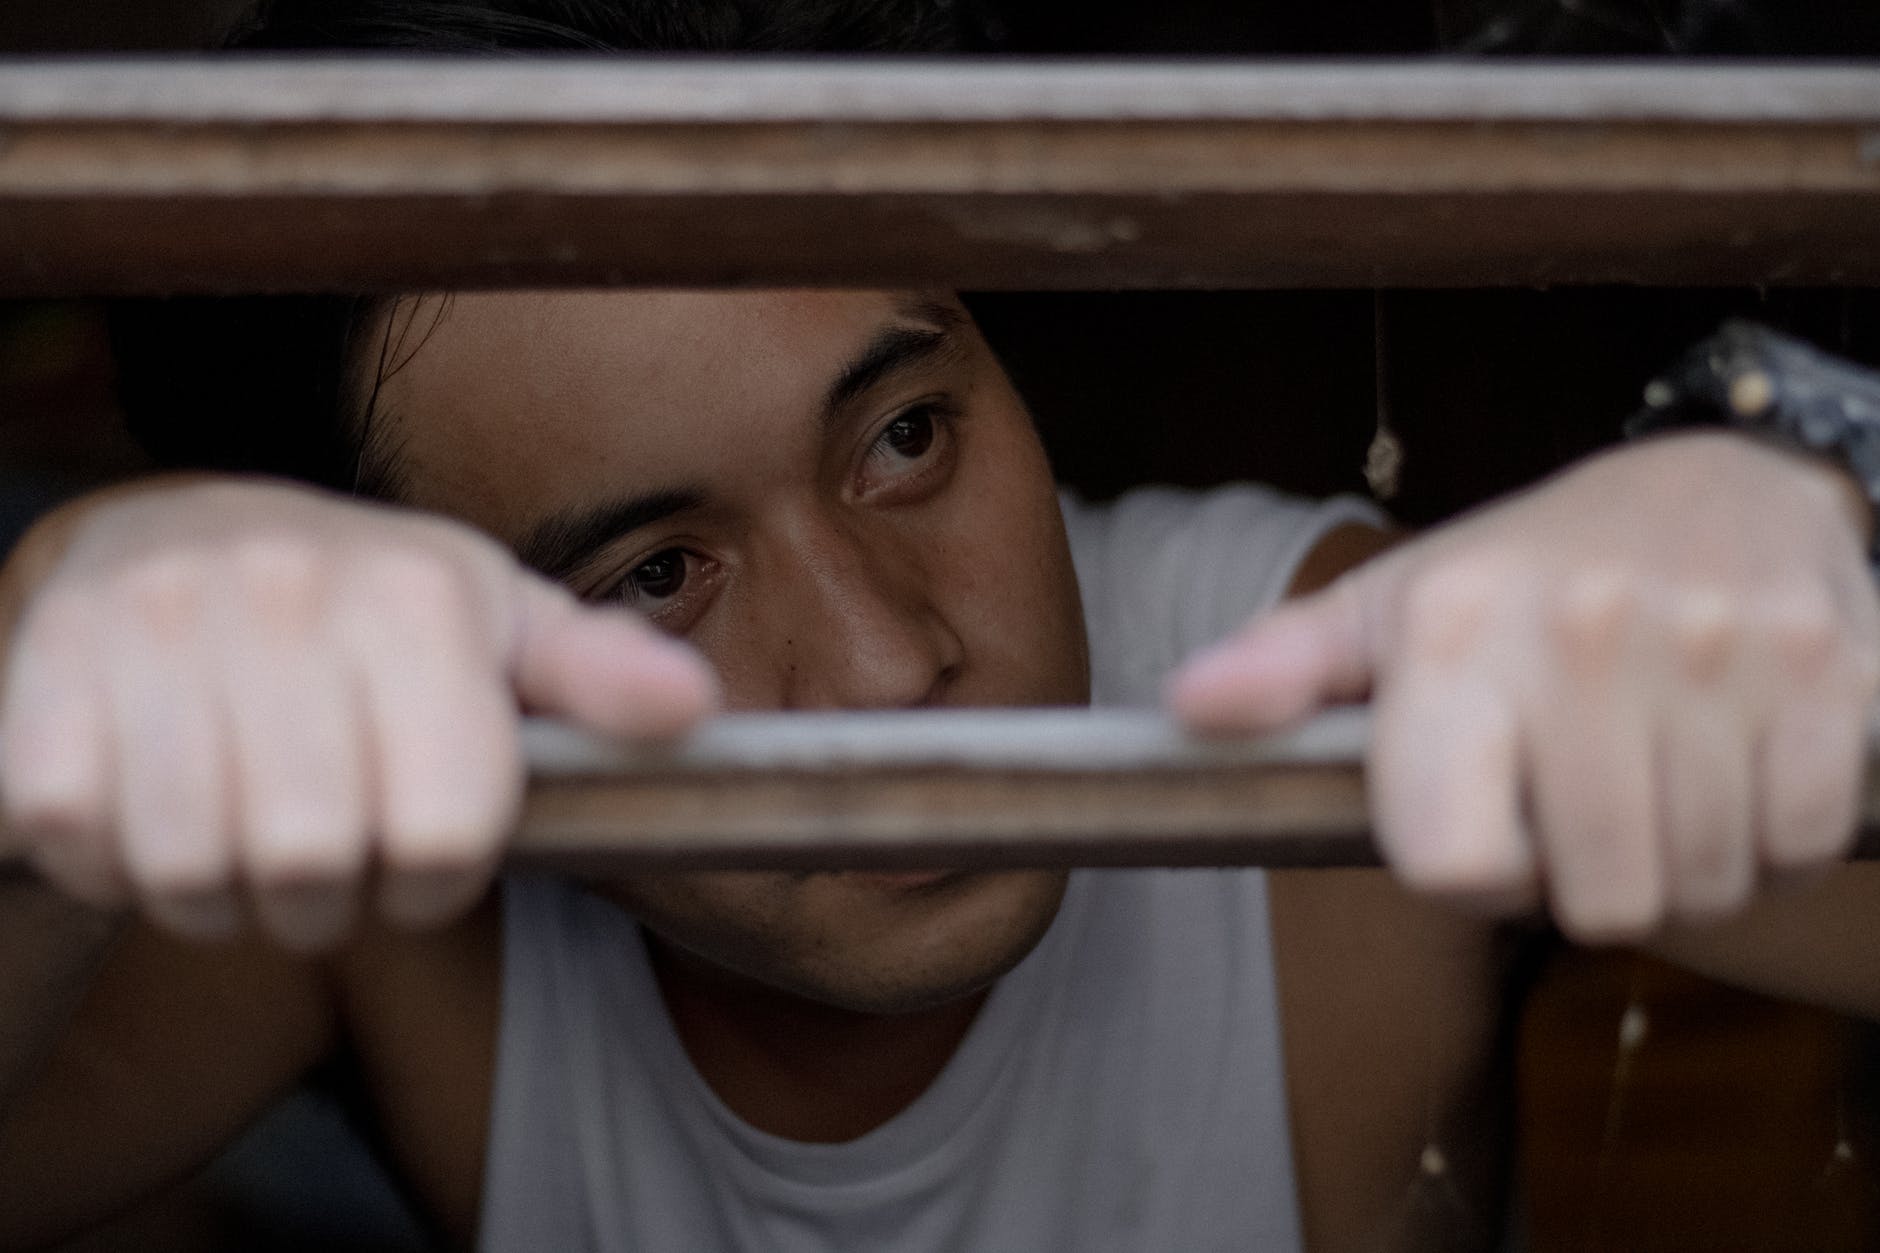 crop pensive ethnic man behind bars in daytime